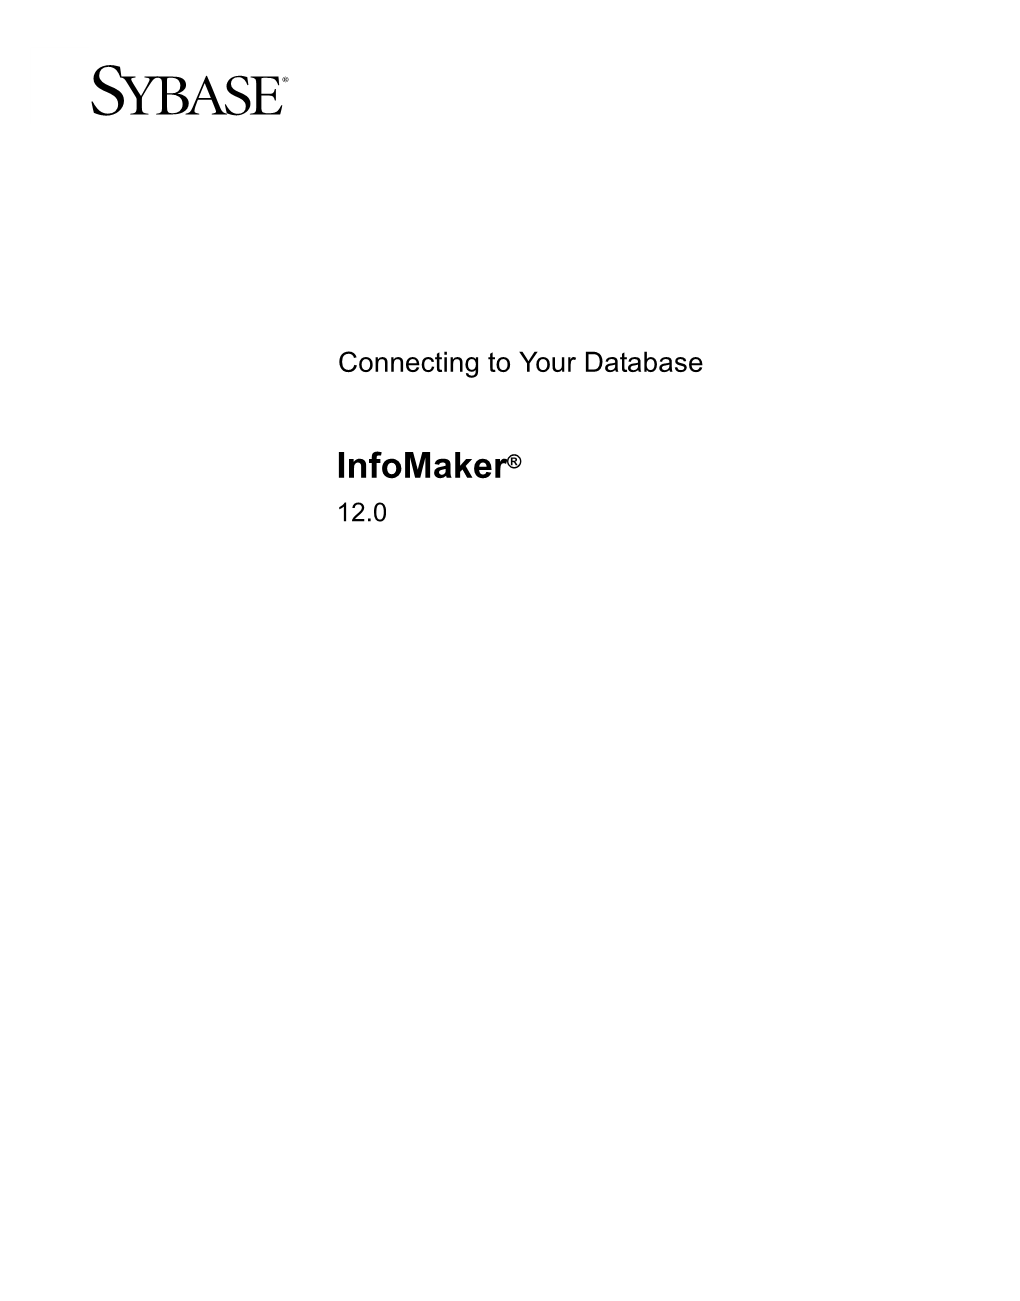 Infomaker® 12.0 DOCUMENT ID: DC37791-01-1200-01